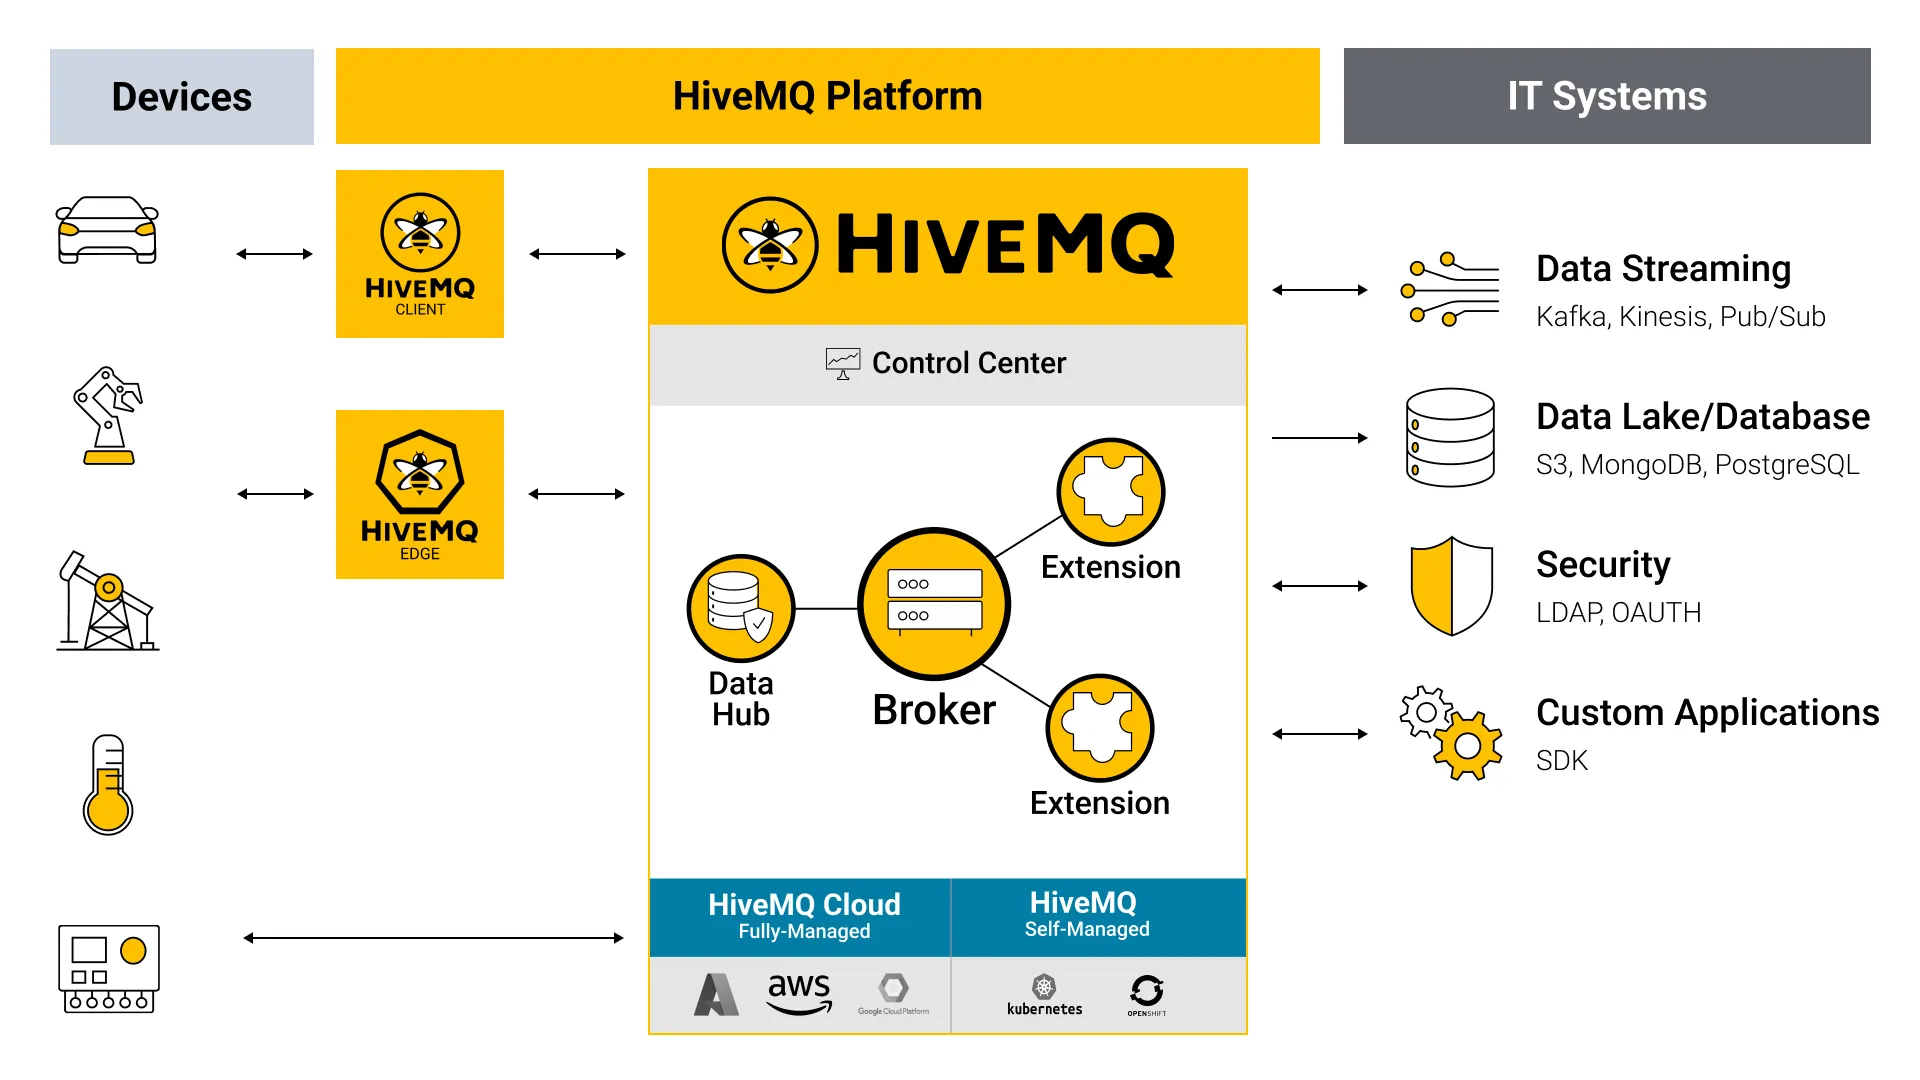 HiveMQ Platform Architecture Overview